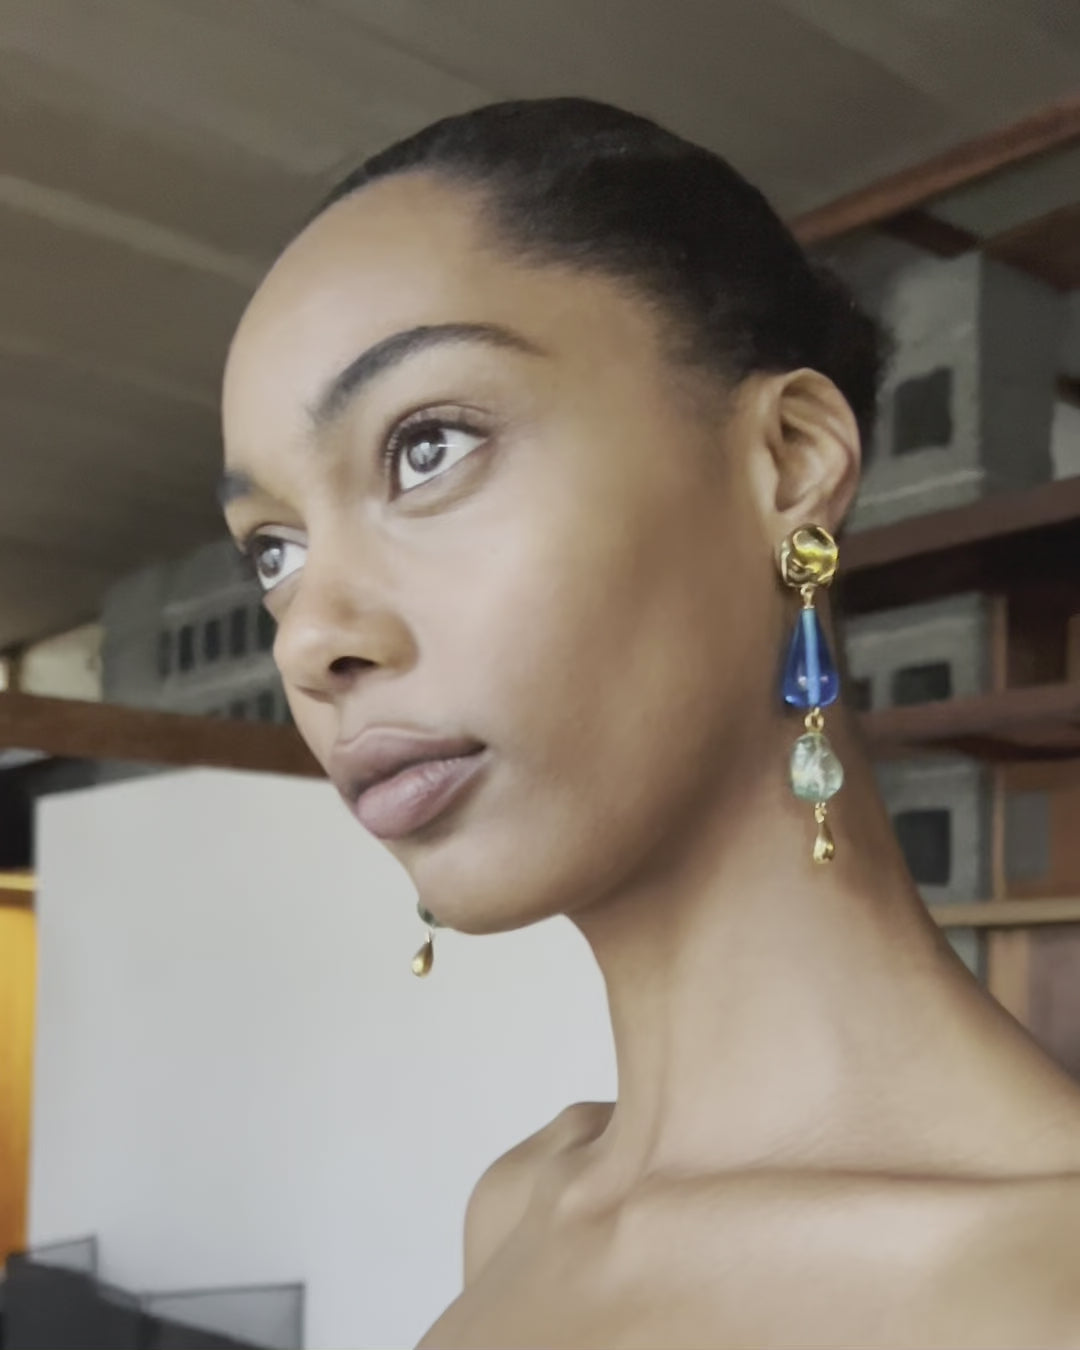 Video of model against wooden shelves, wearing Palma Earrings.